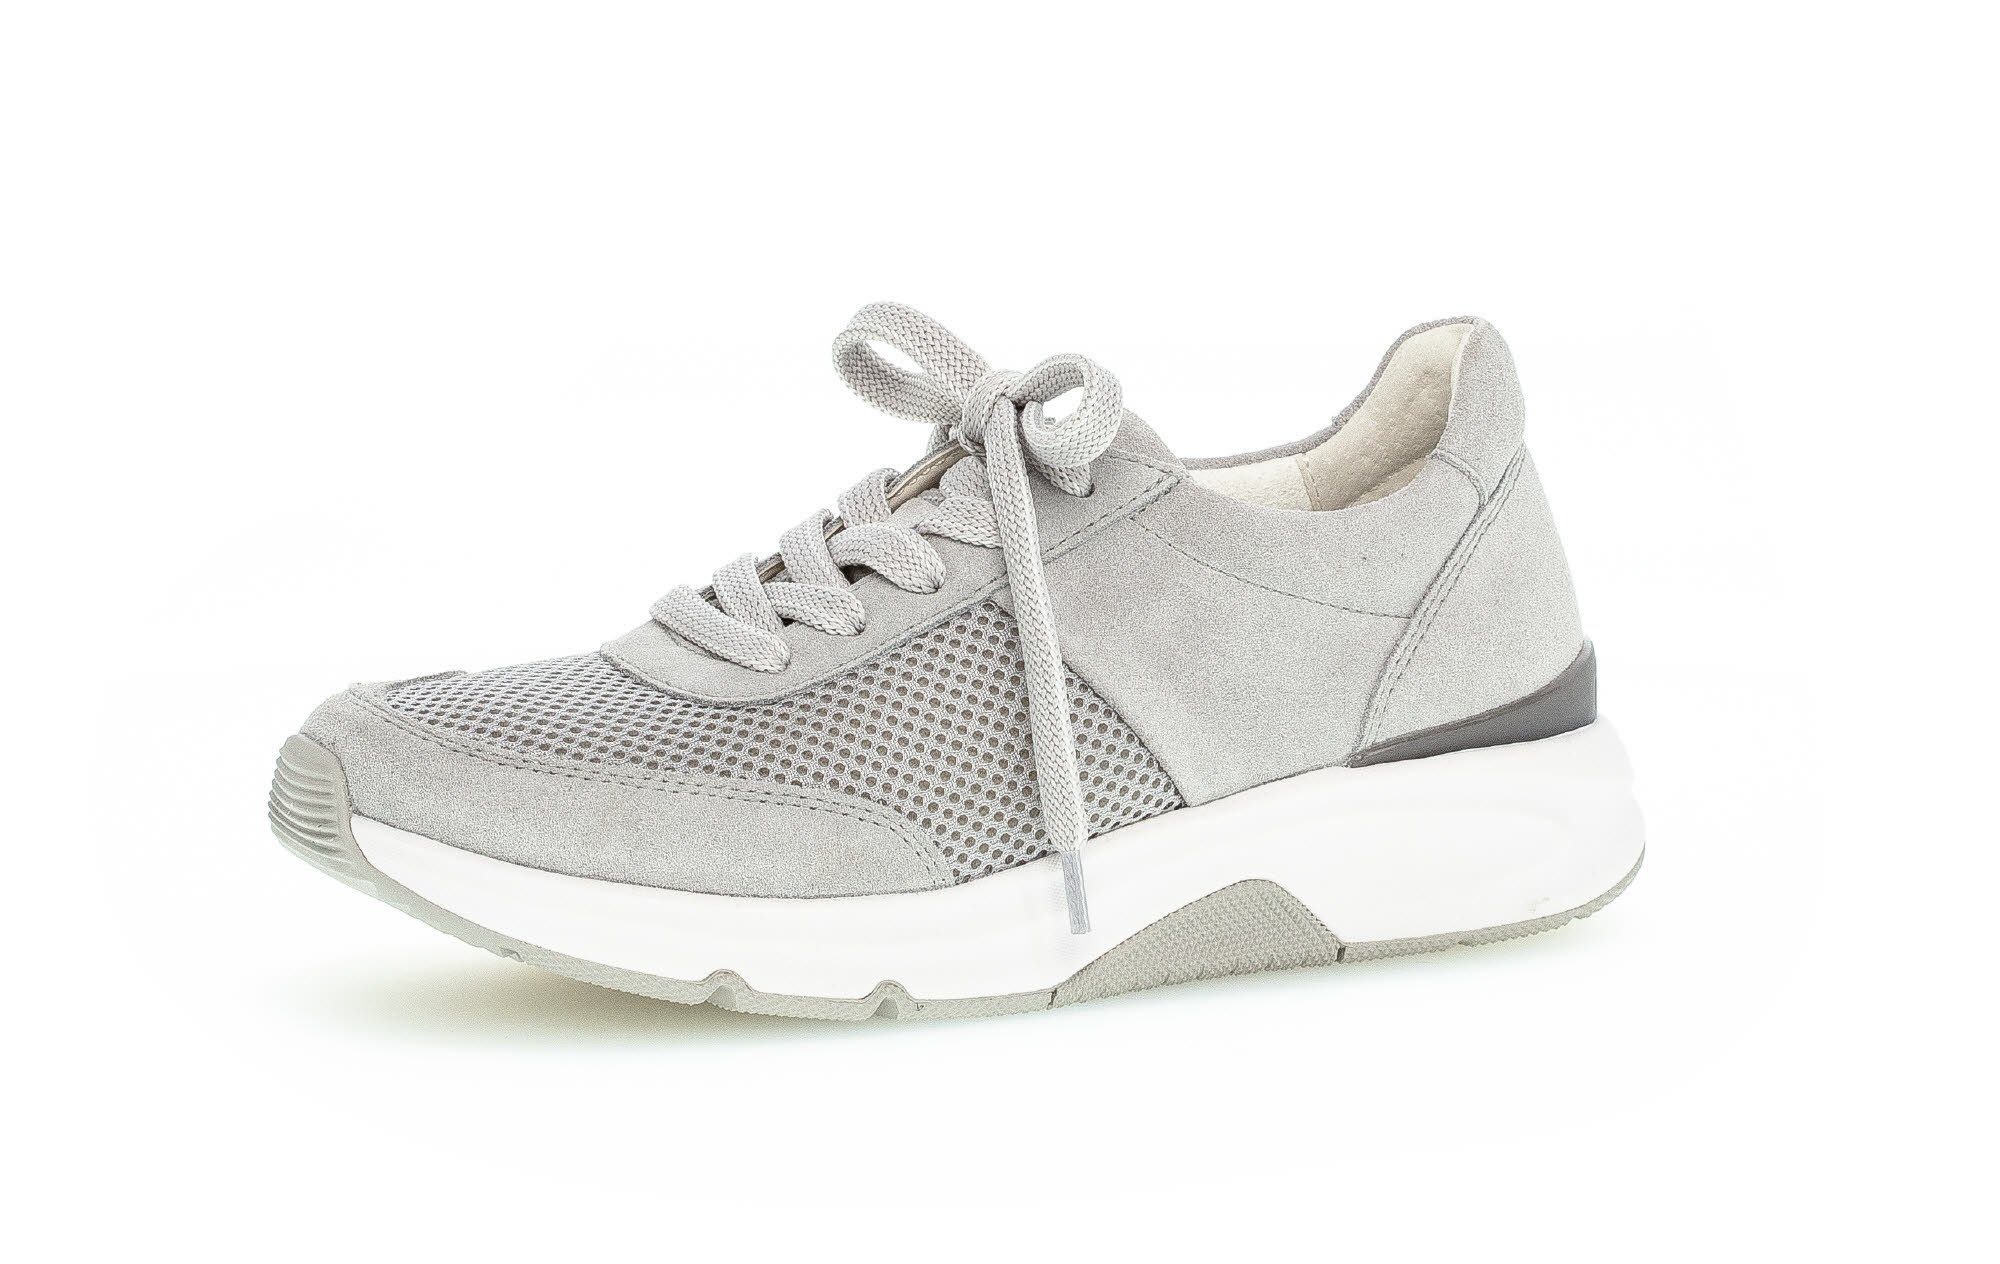 Gabor Sneaker Grau 86.897.40 40) (light / grey